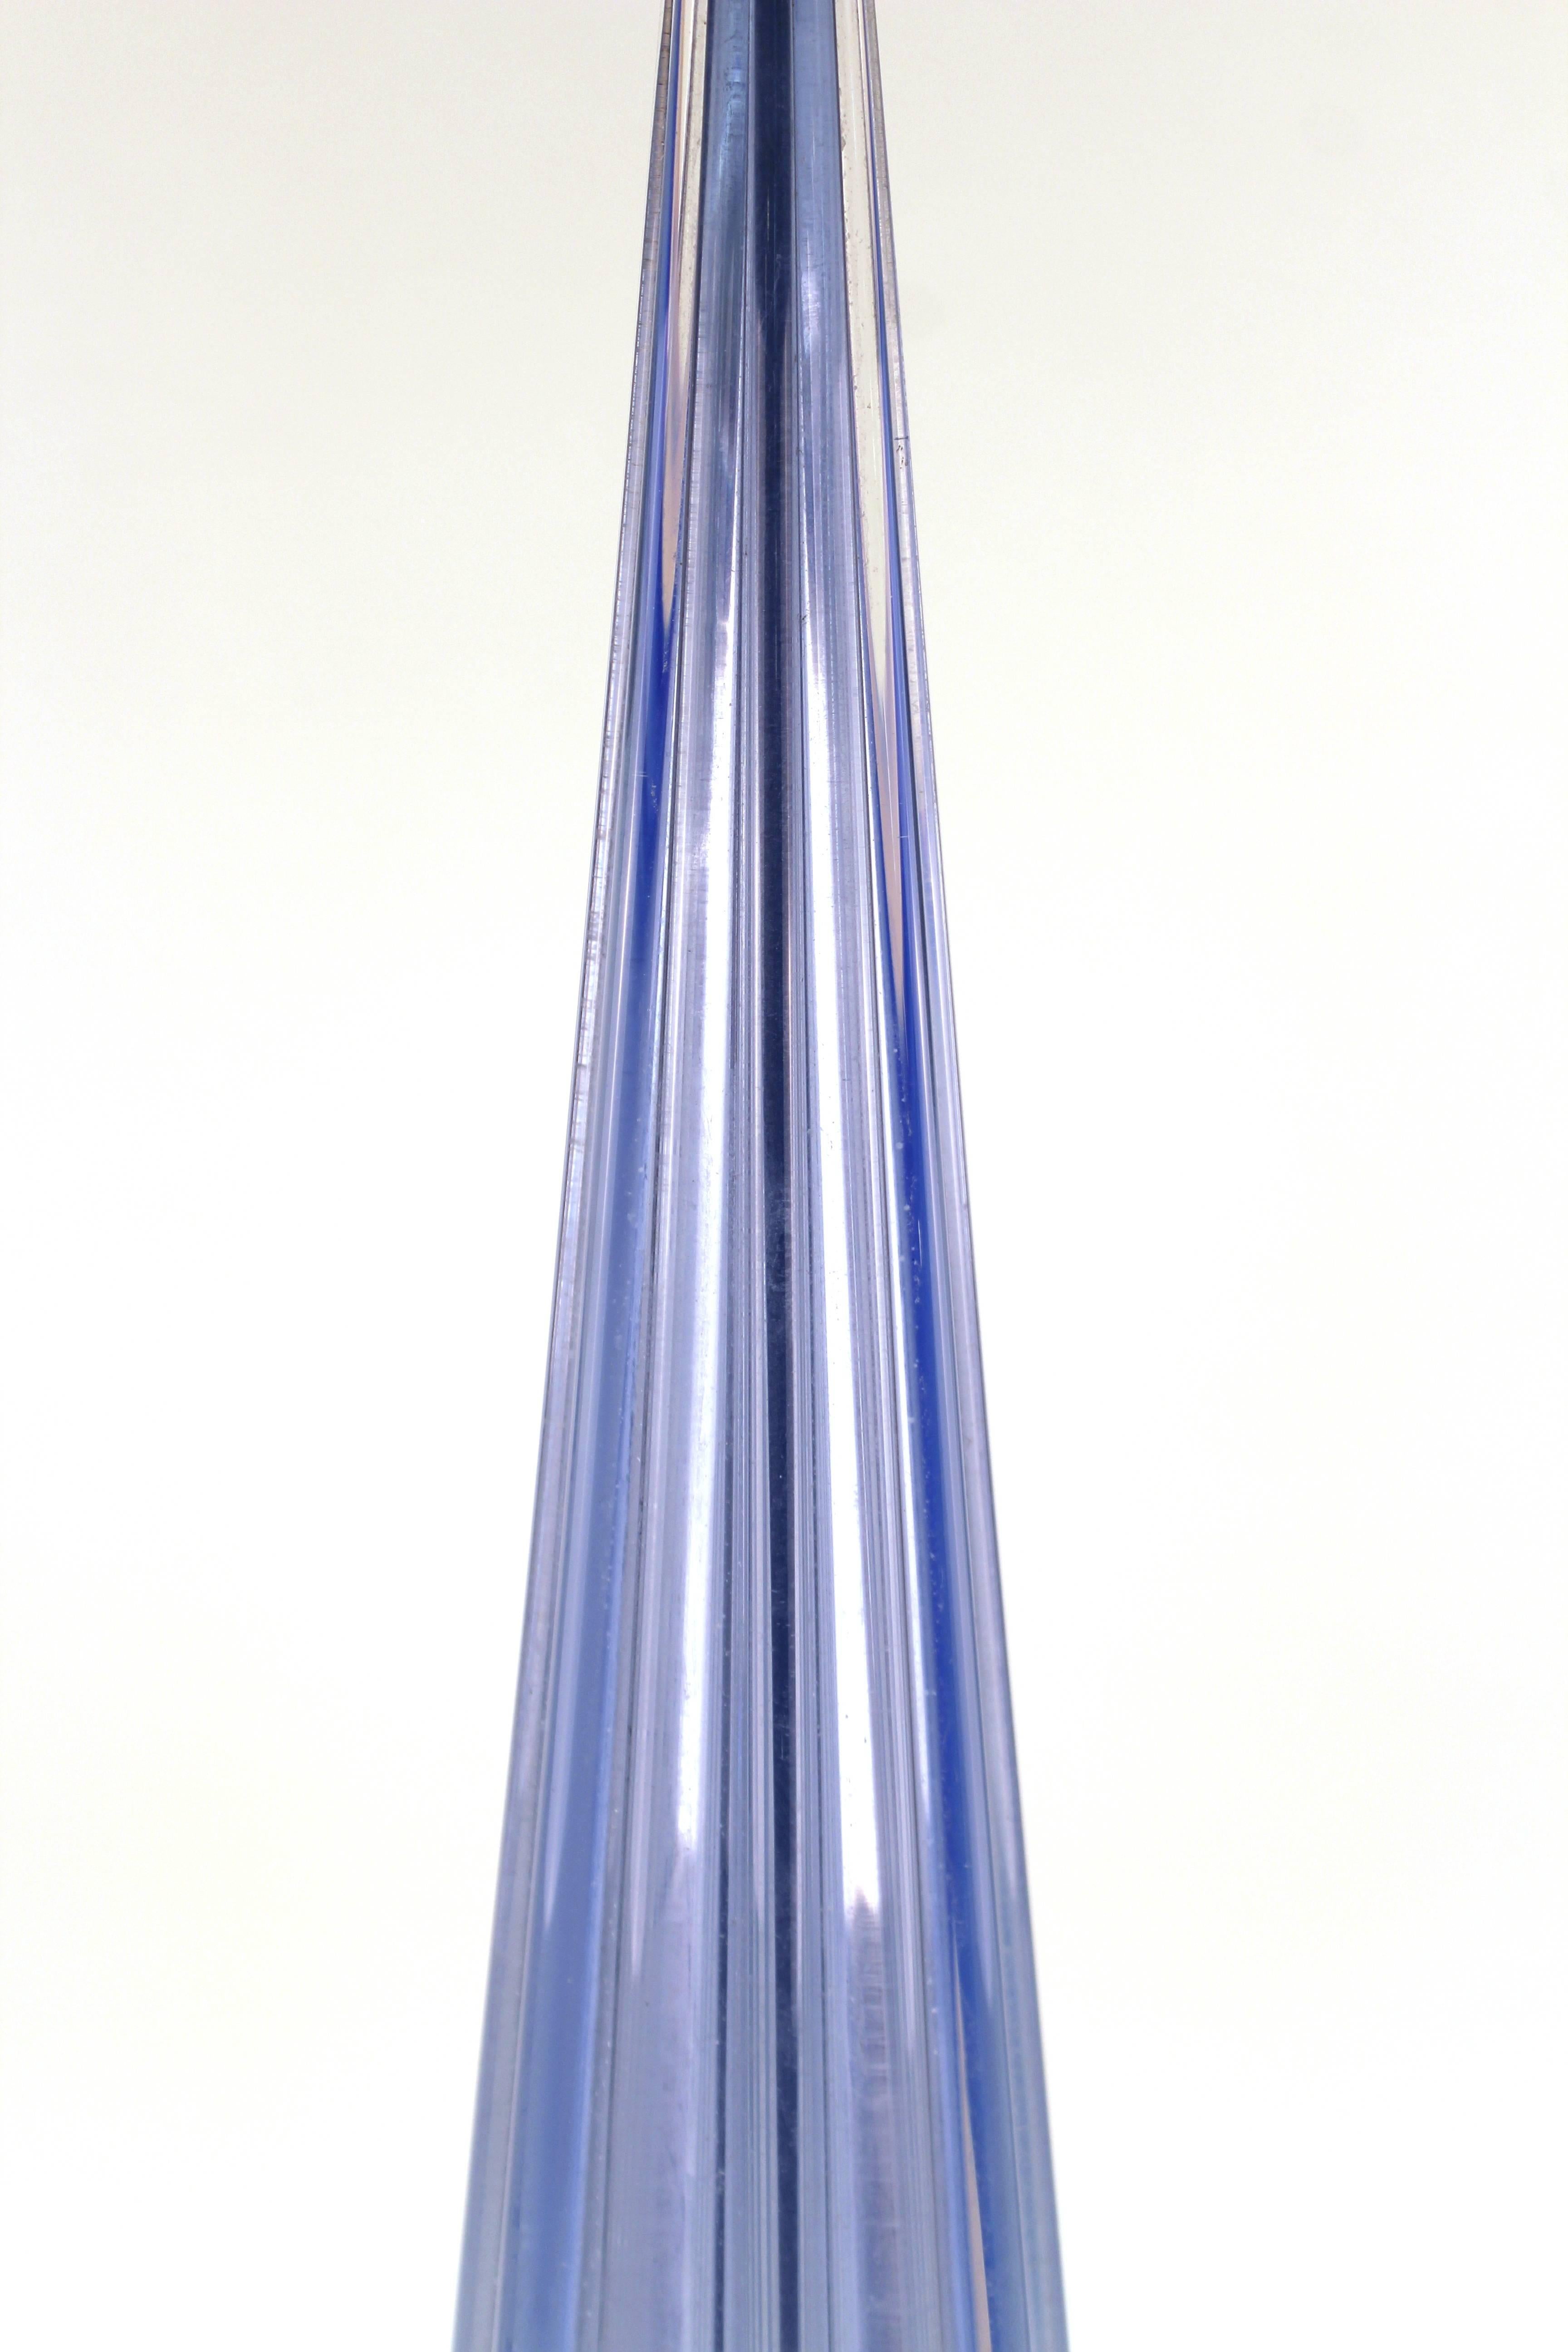 20th Century Italian Murano Glass Pale Blue Table Lamp